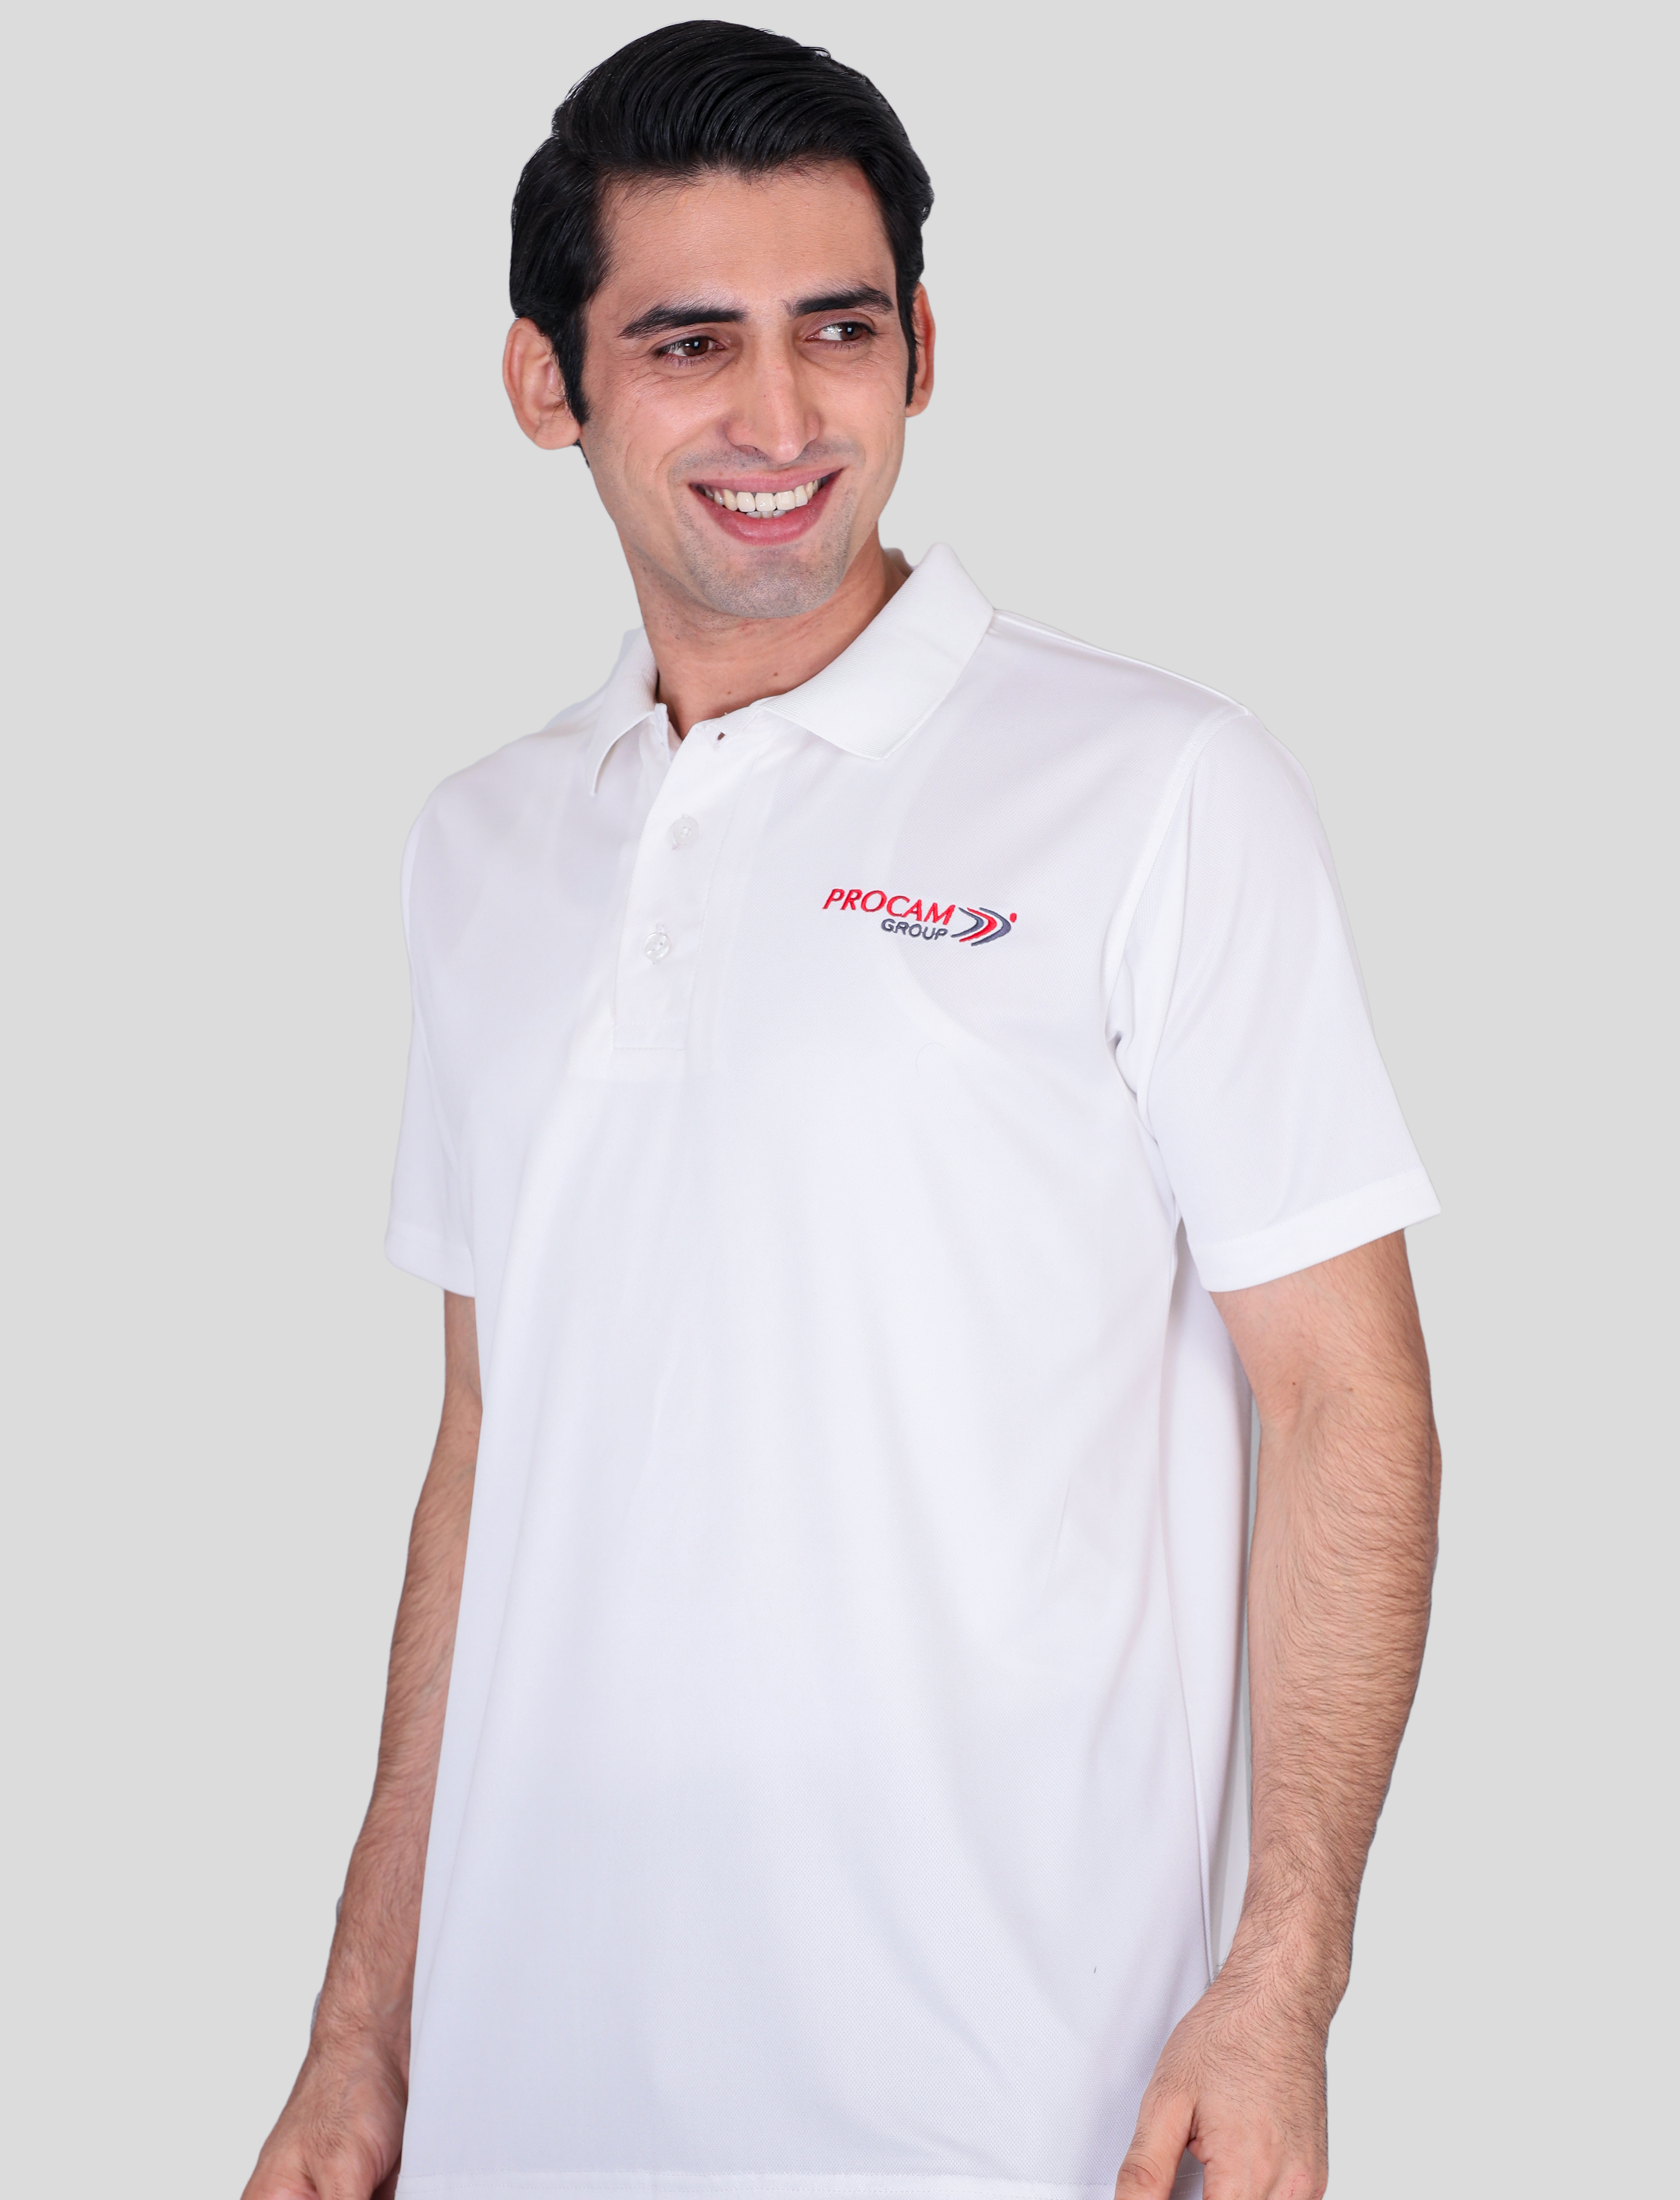 Procam white custom polo t-shirts with company logo